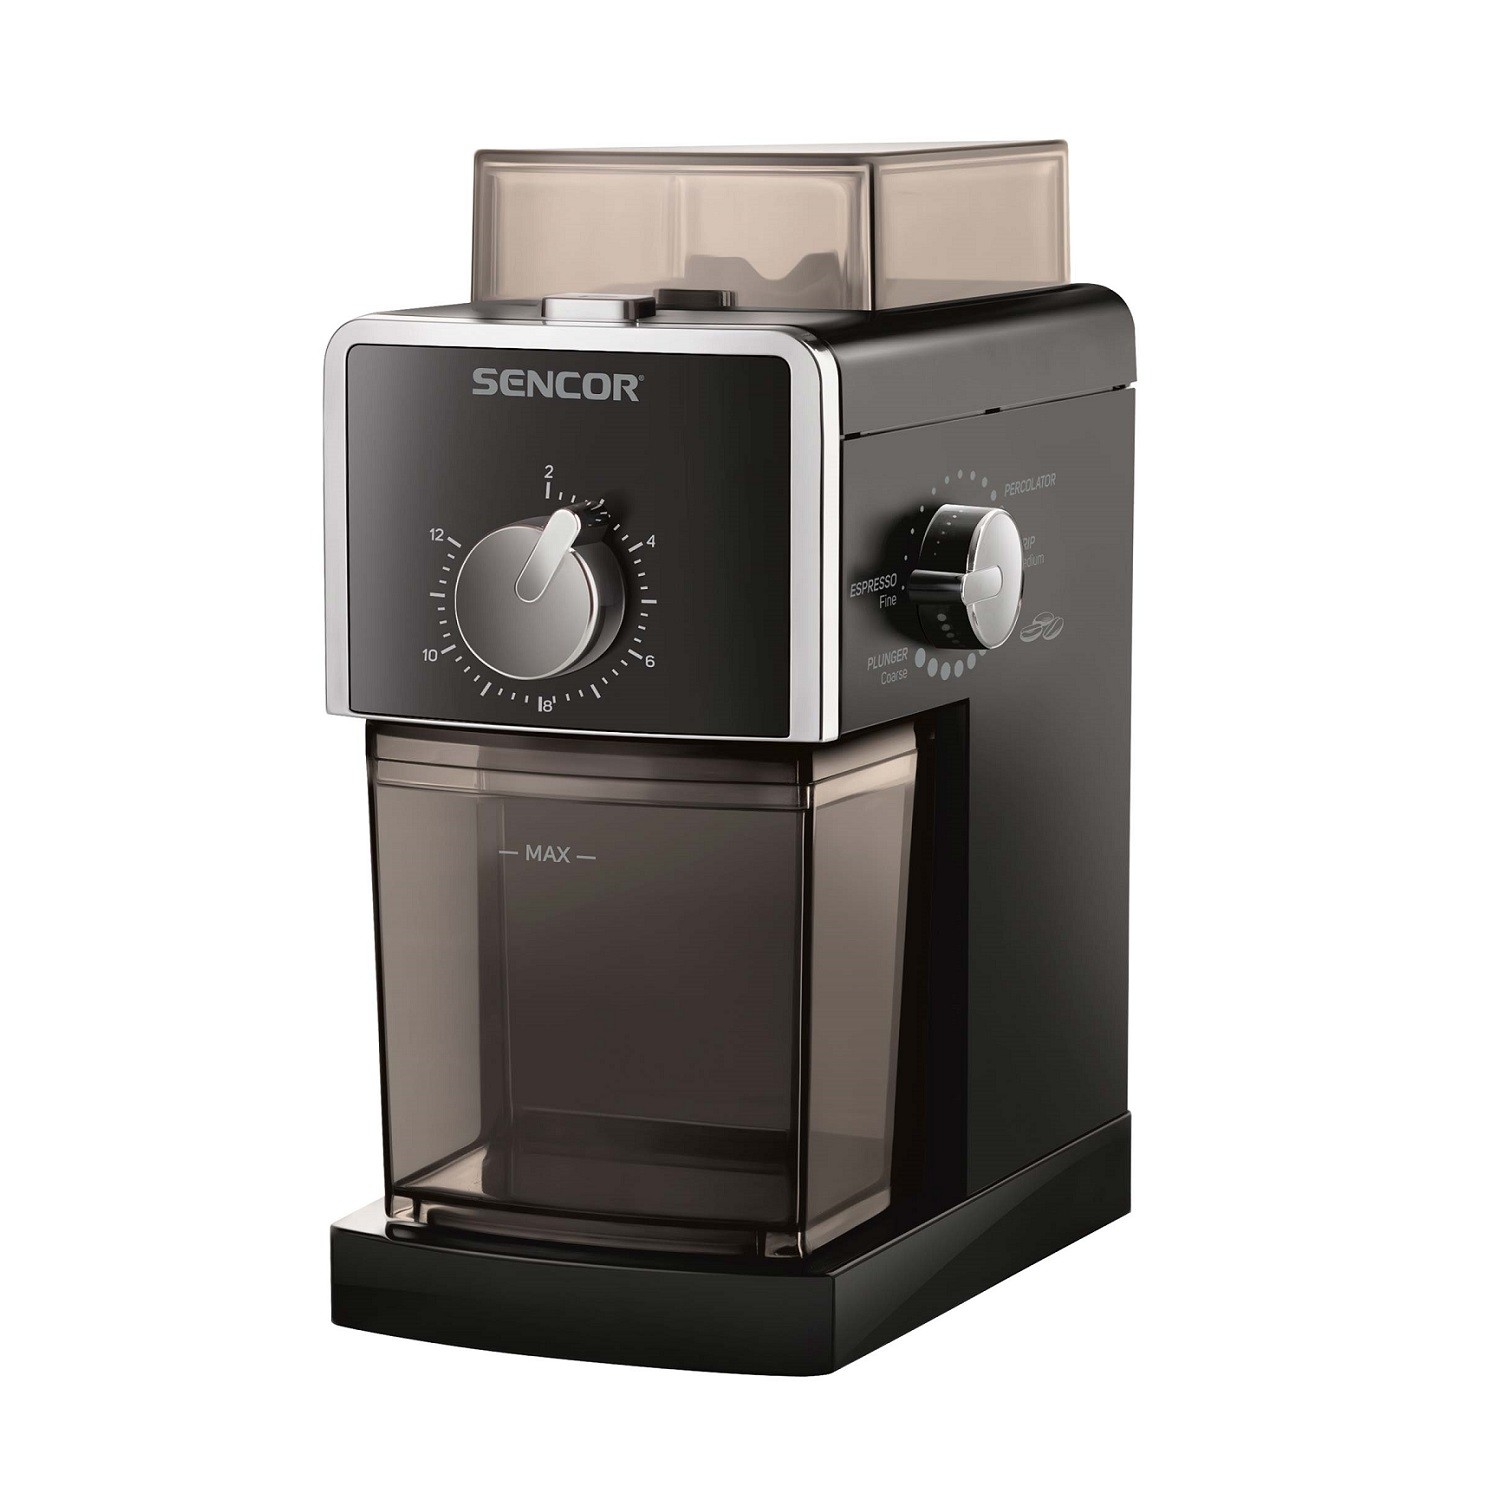 آسیاب قهوه سنکور مدل SCG 5050BK - Sencor SCG 5050BK ELECTRIC COFFEE GRINDER